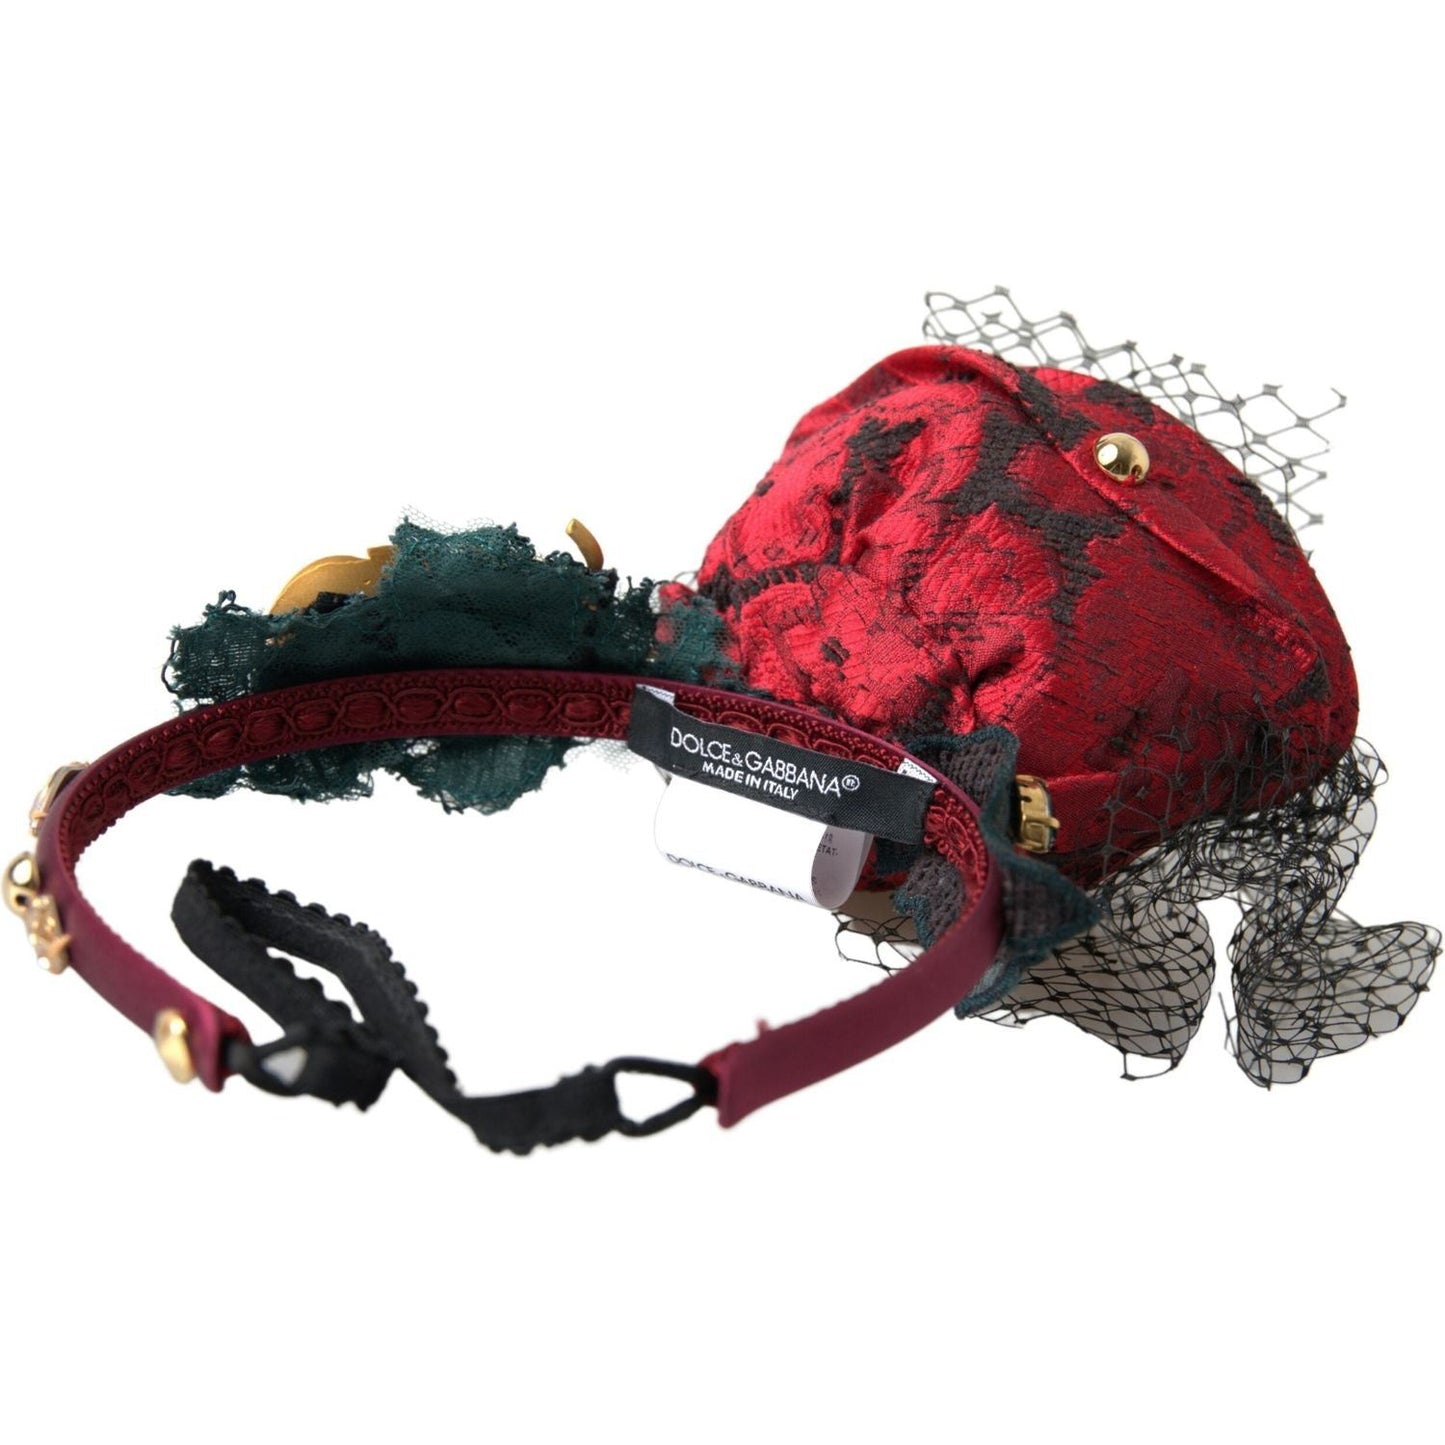 Dolce & Gabbana Enchanted Rose Crystal Headband Diadem red-with-multicolor-rose-silk-crystal-netted-logo-diadem-headband 465A2214-scaled-7bbb376d-56a.jpg